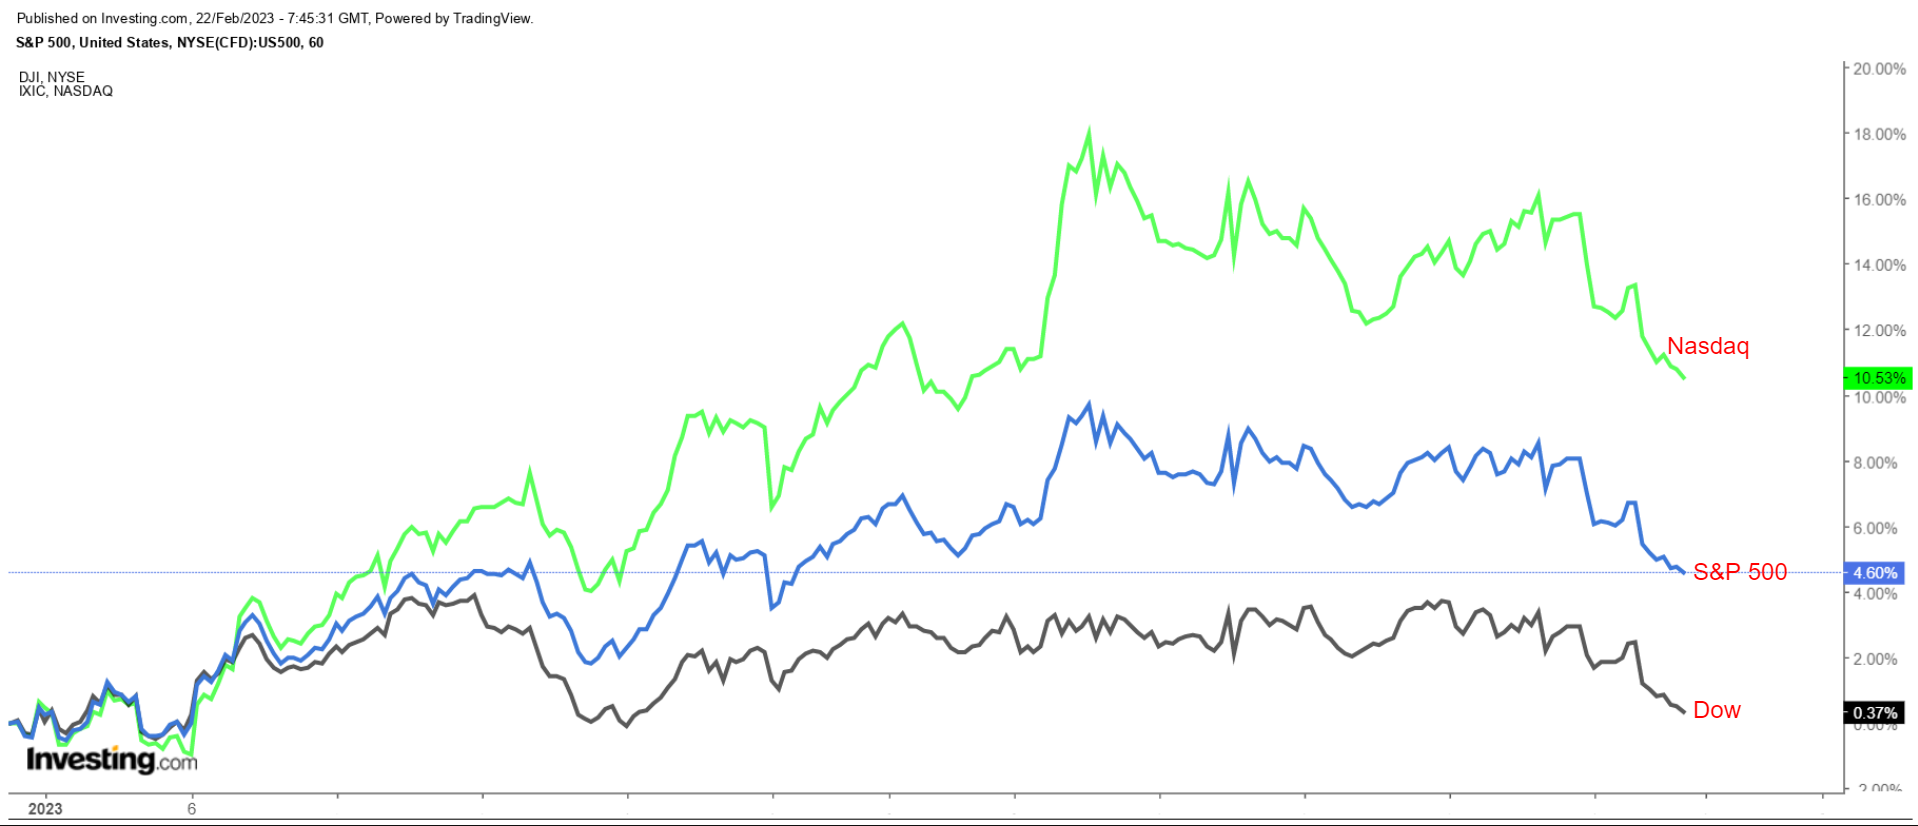 S&P 500, Nasdaq, DJI YTD Price Performance